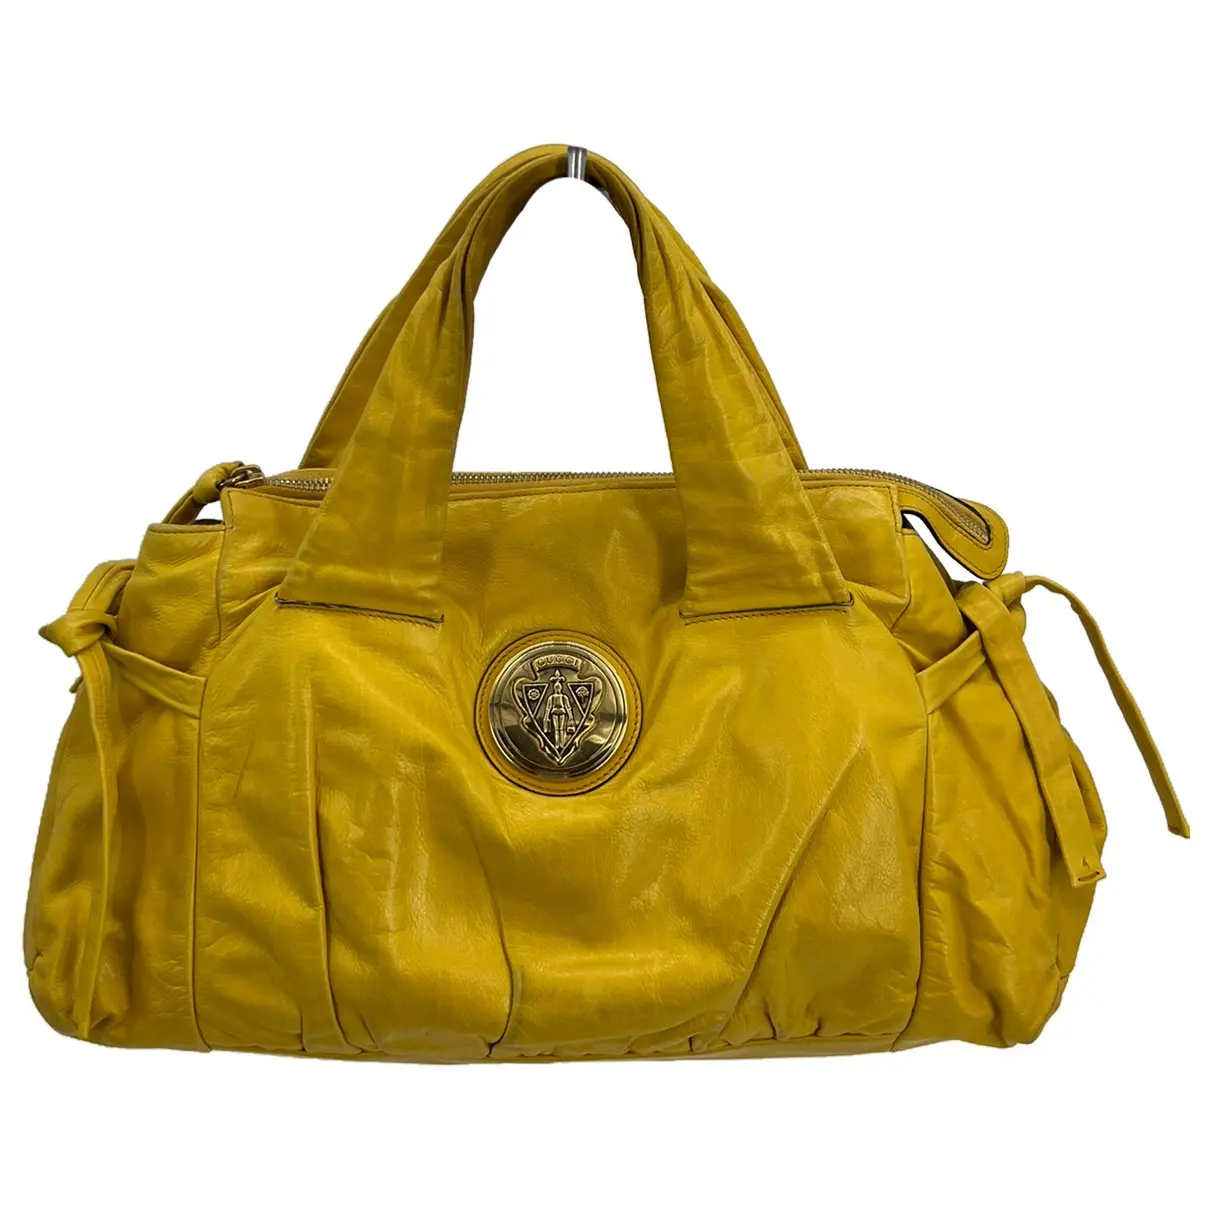 Pony-style calfskin handbag Gucci